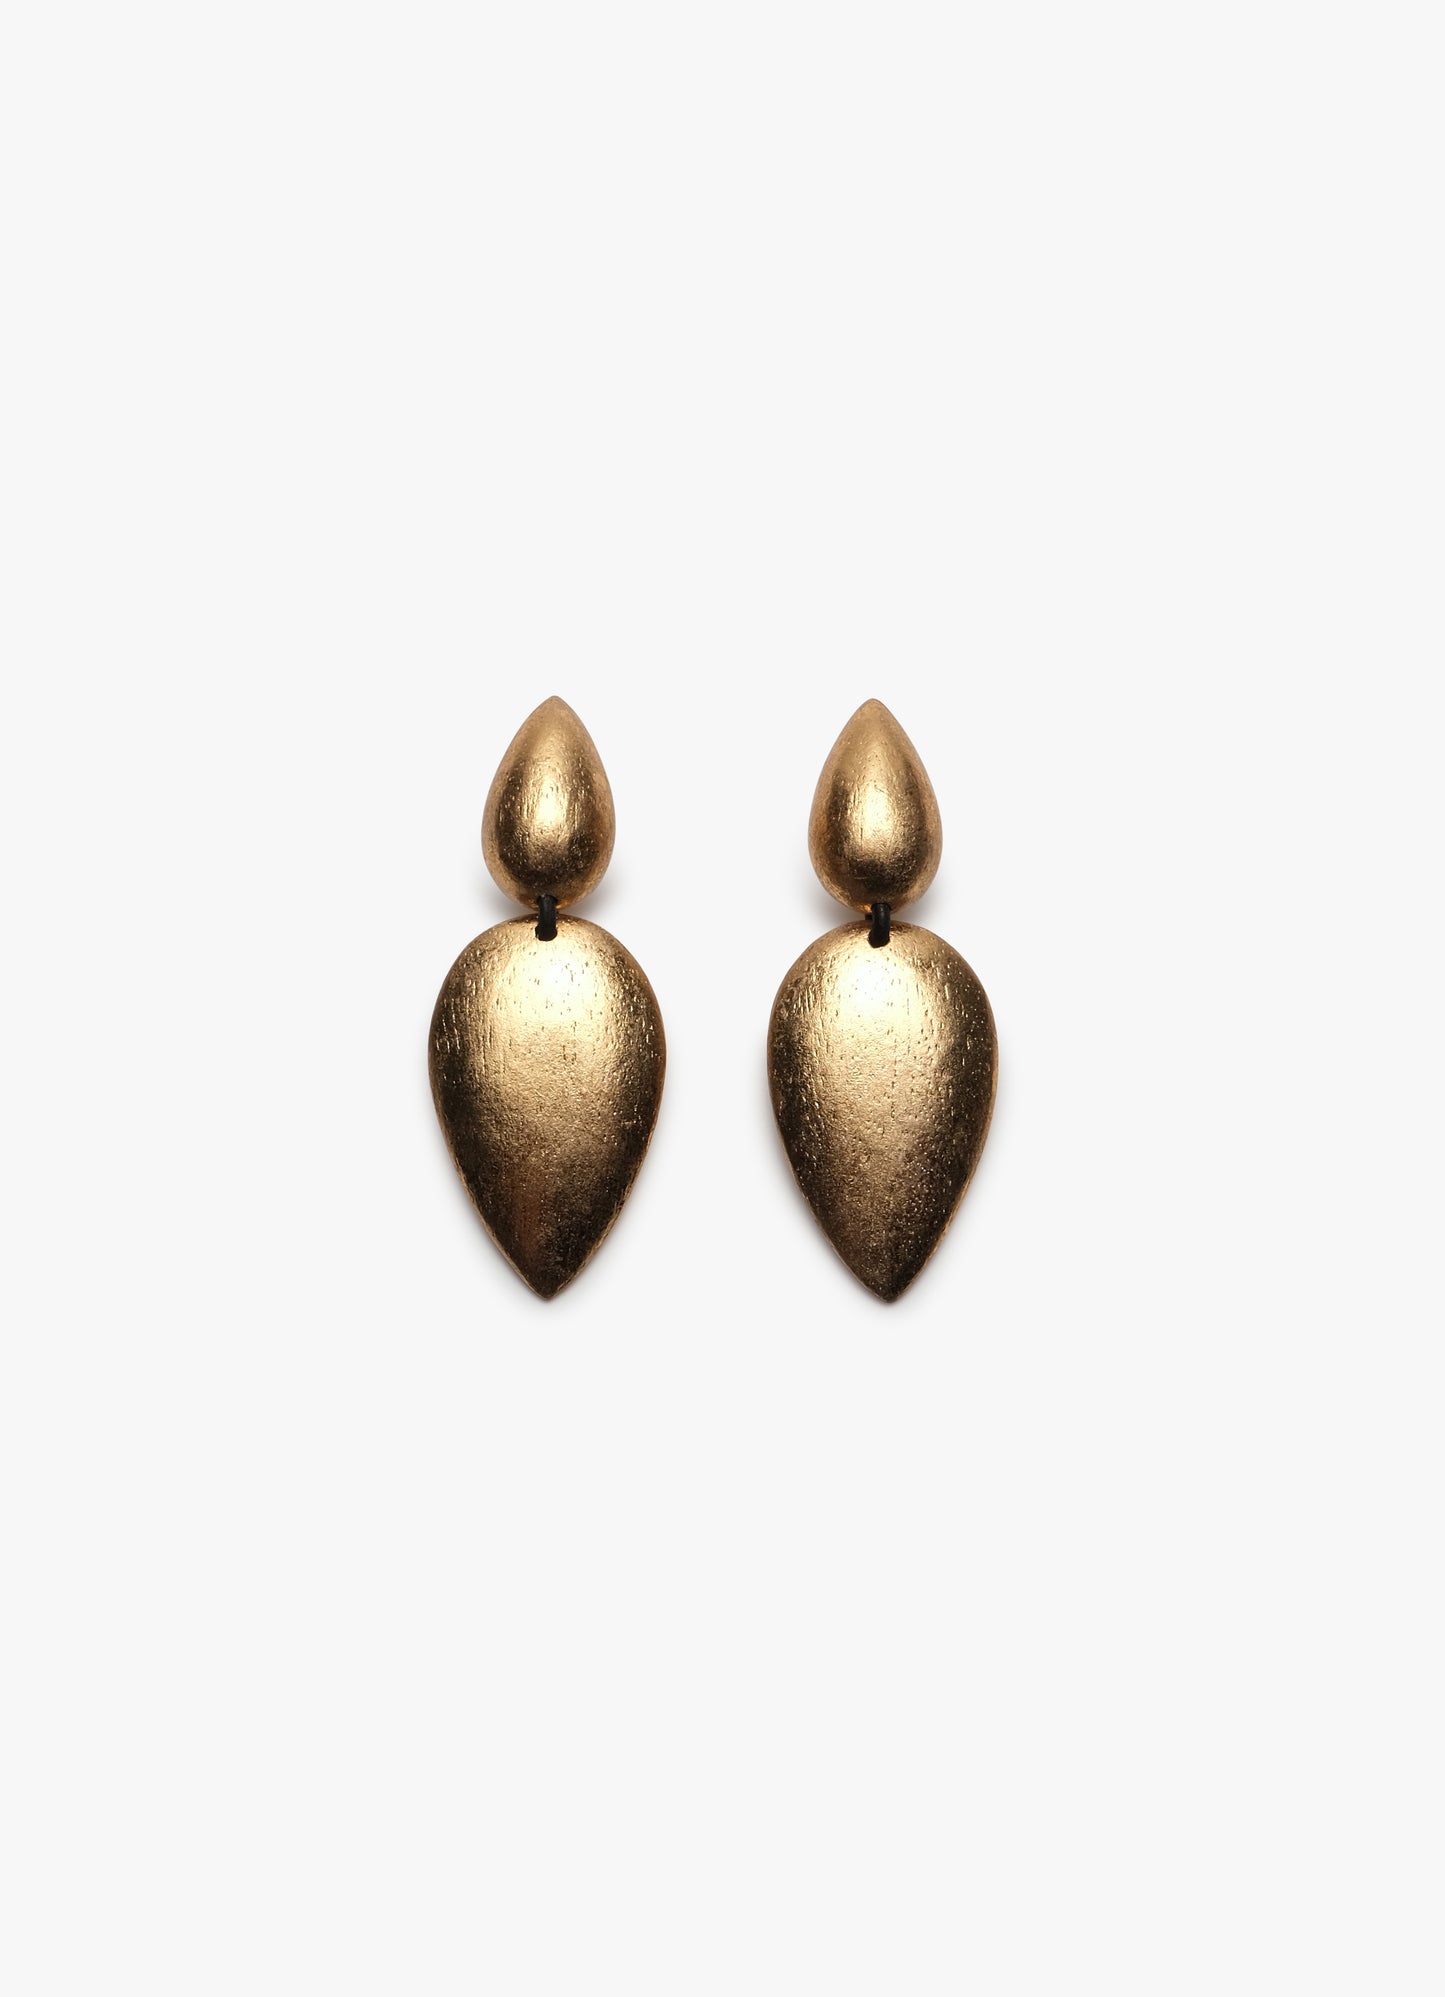 Monies Waff earring: Acacia, goldfoil